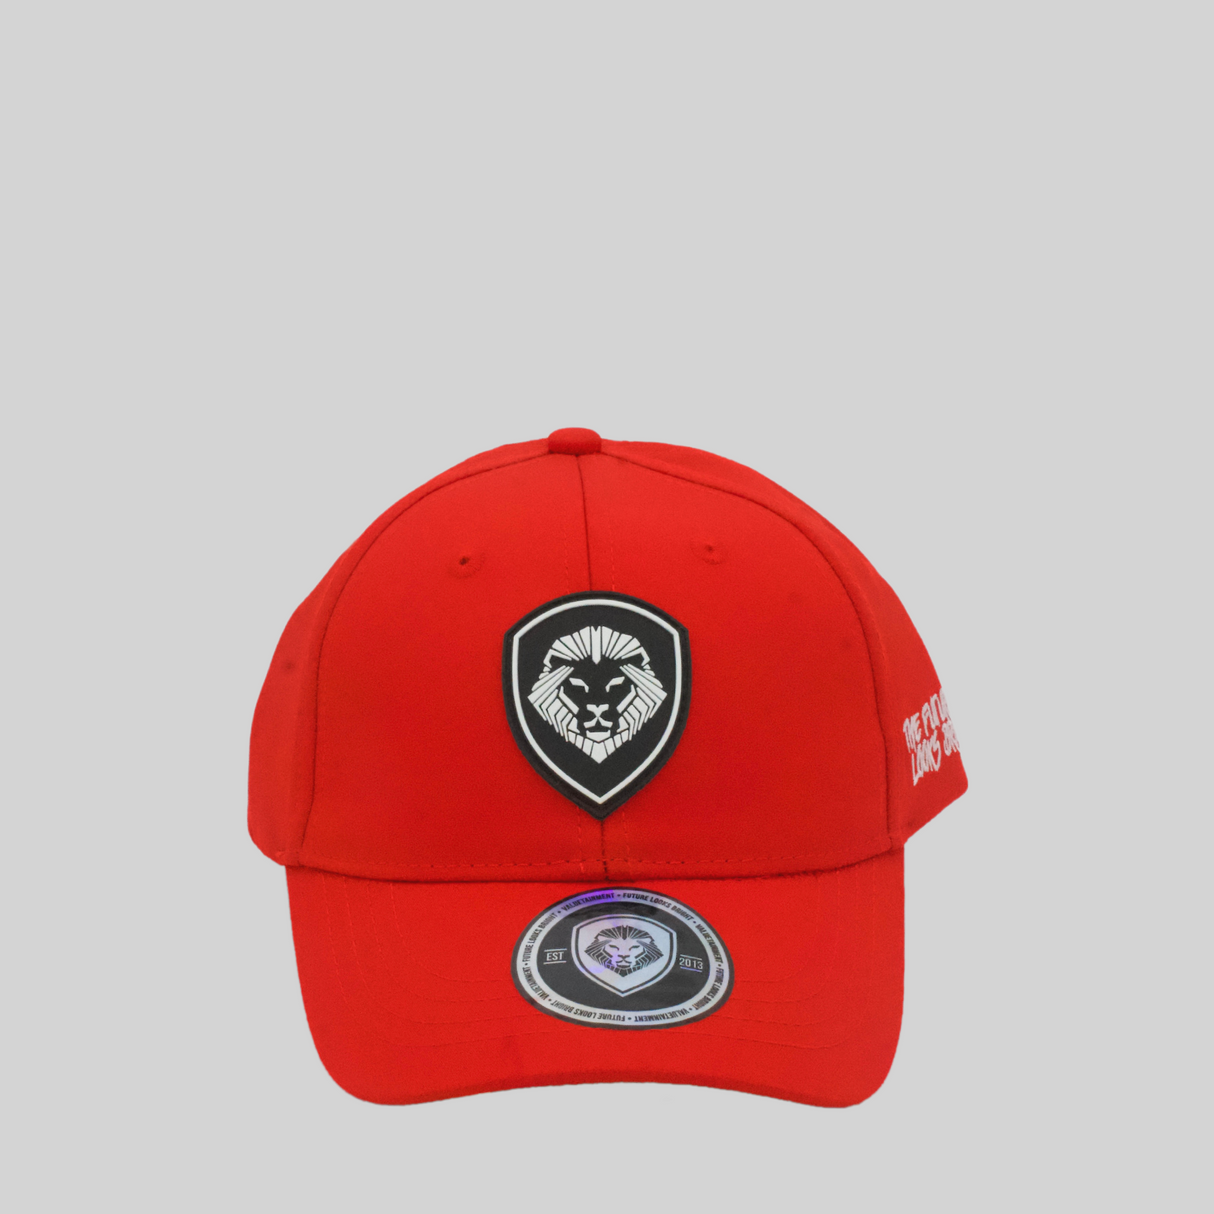 Kids VT Shield Logo Future Looks Bright Red Snapback Hat